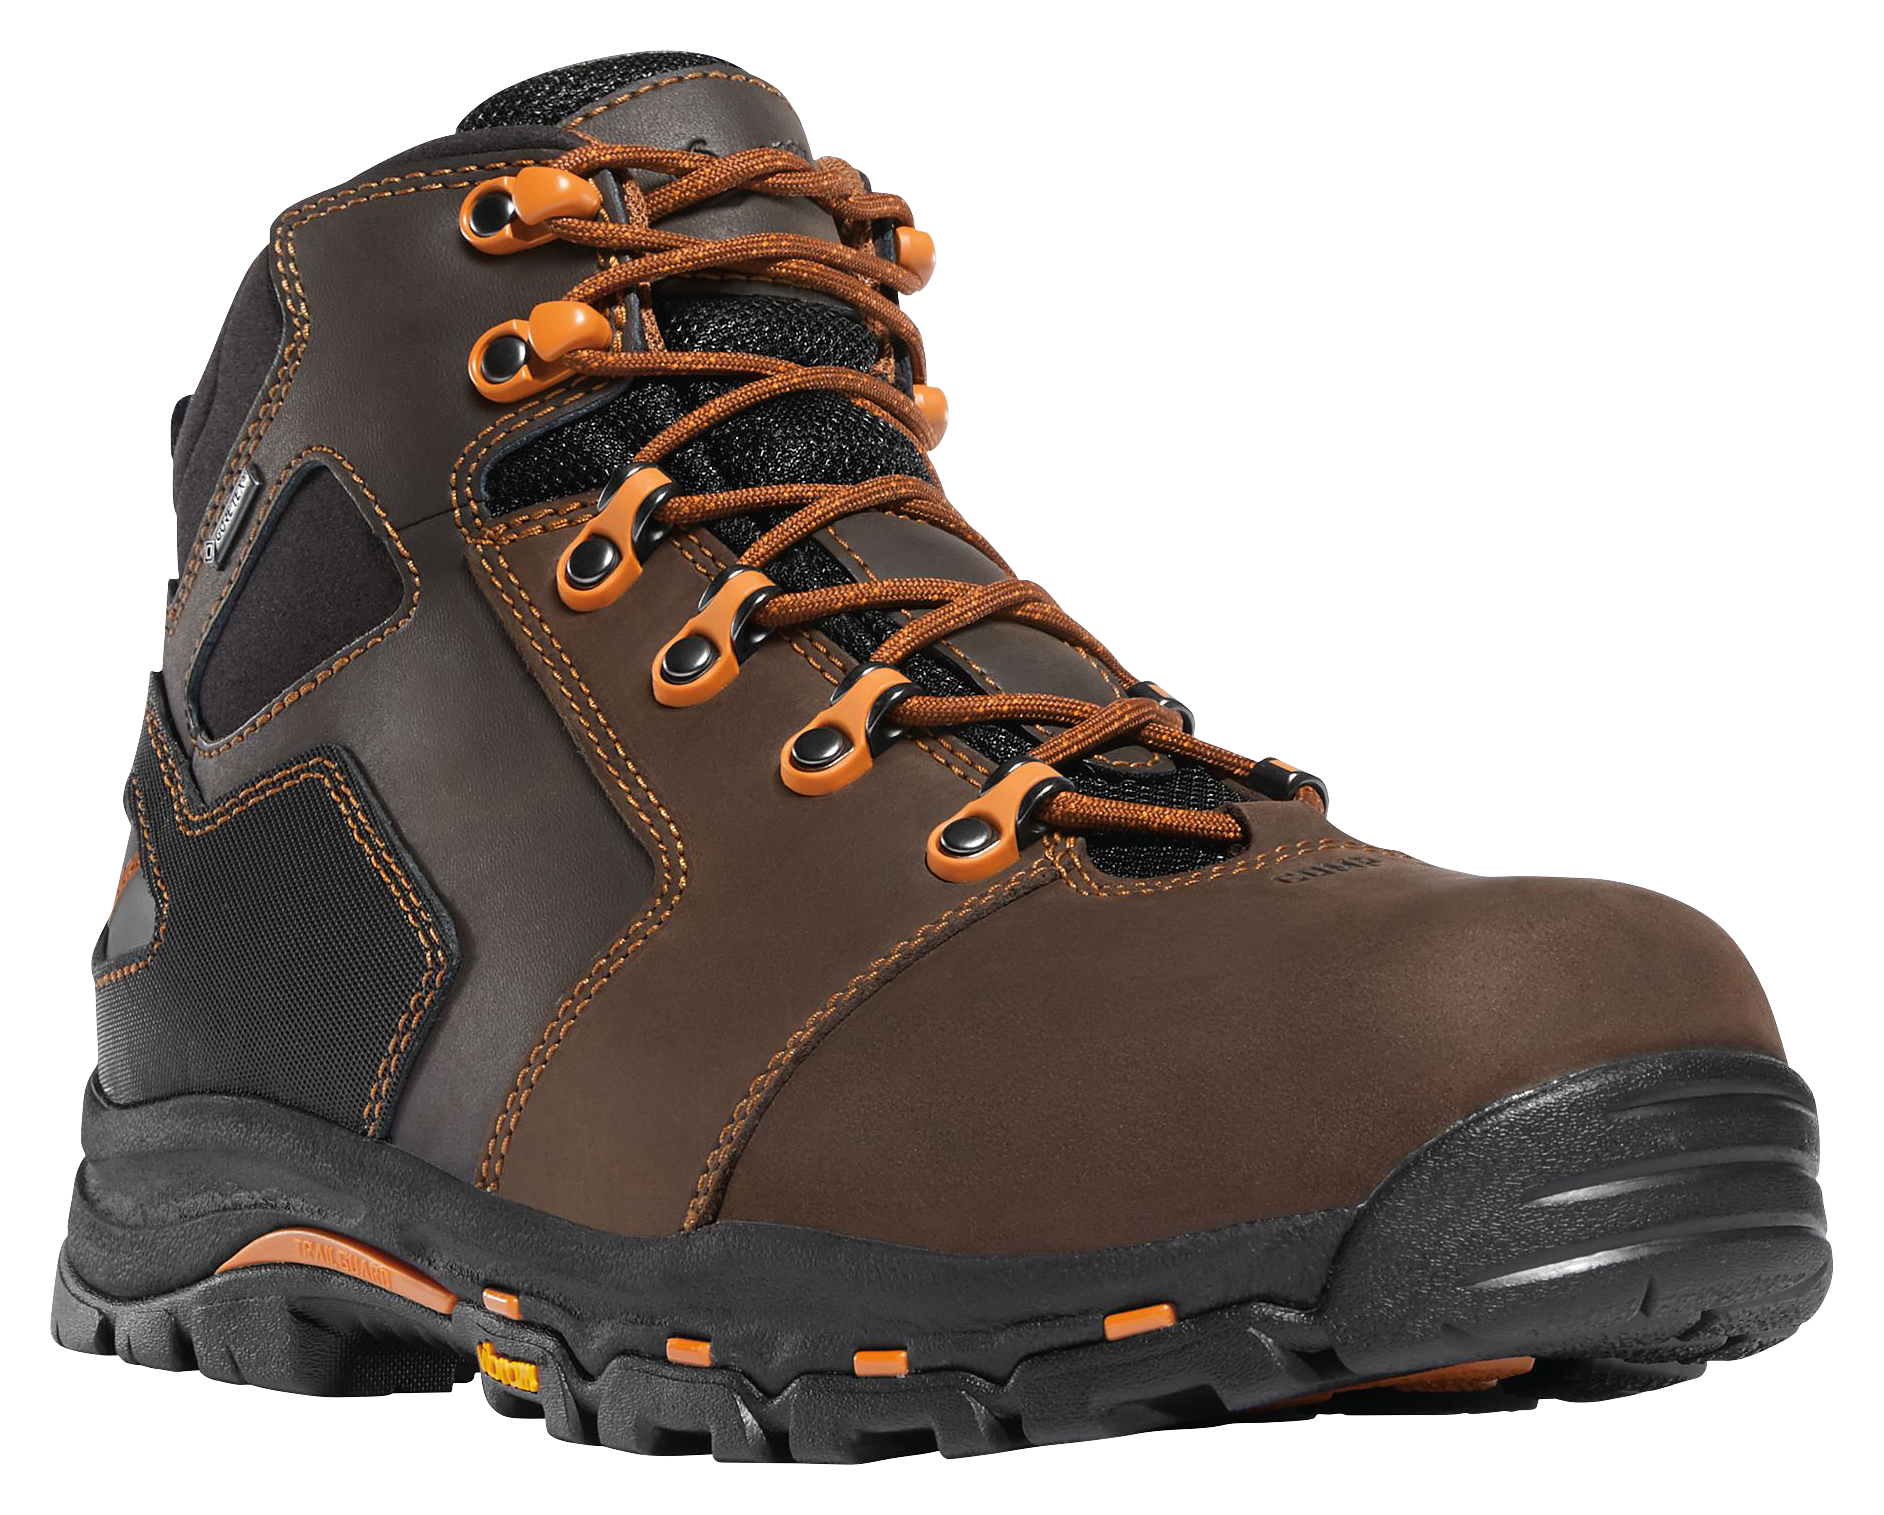 Danner Vicious 4.5'' GORE-TEX EH Work Boots for Men - Brown/Orange - 9.5W